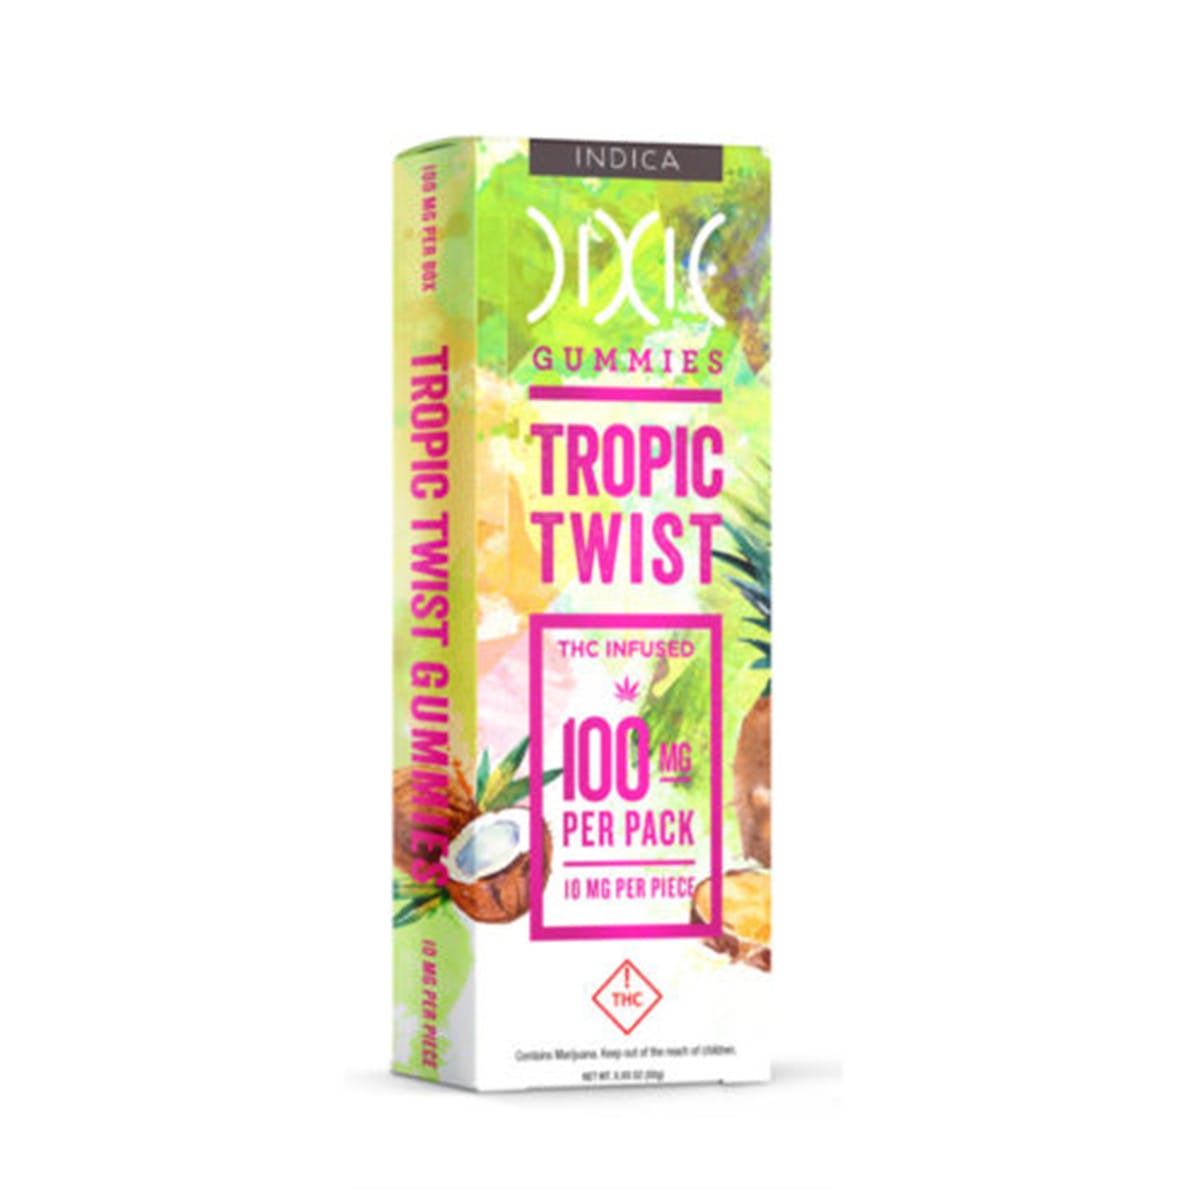 marijuana-dispensaries-the-spot-420-trinidad-in-trinidad-indica-tropic-twist-gummies-100mg